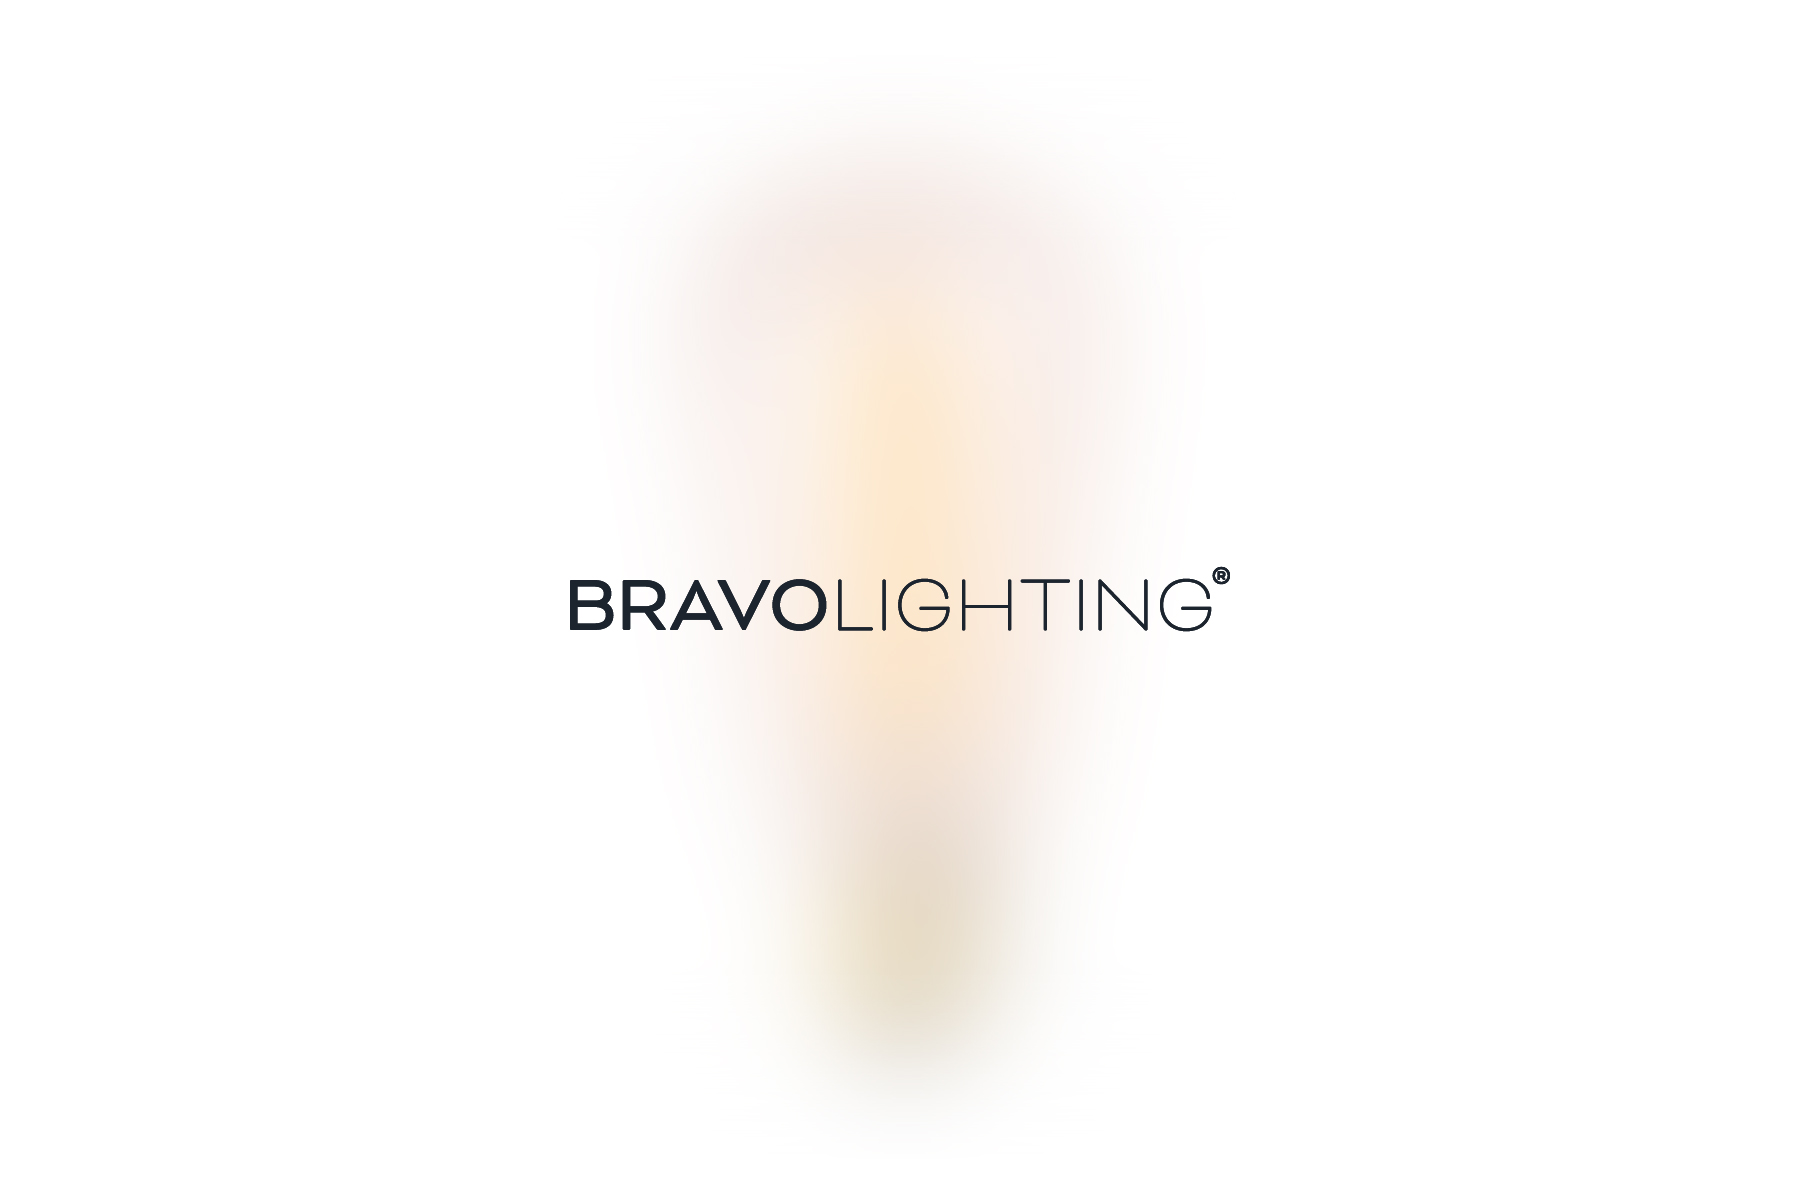 Bravo Lighting Image fallback